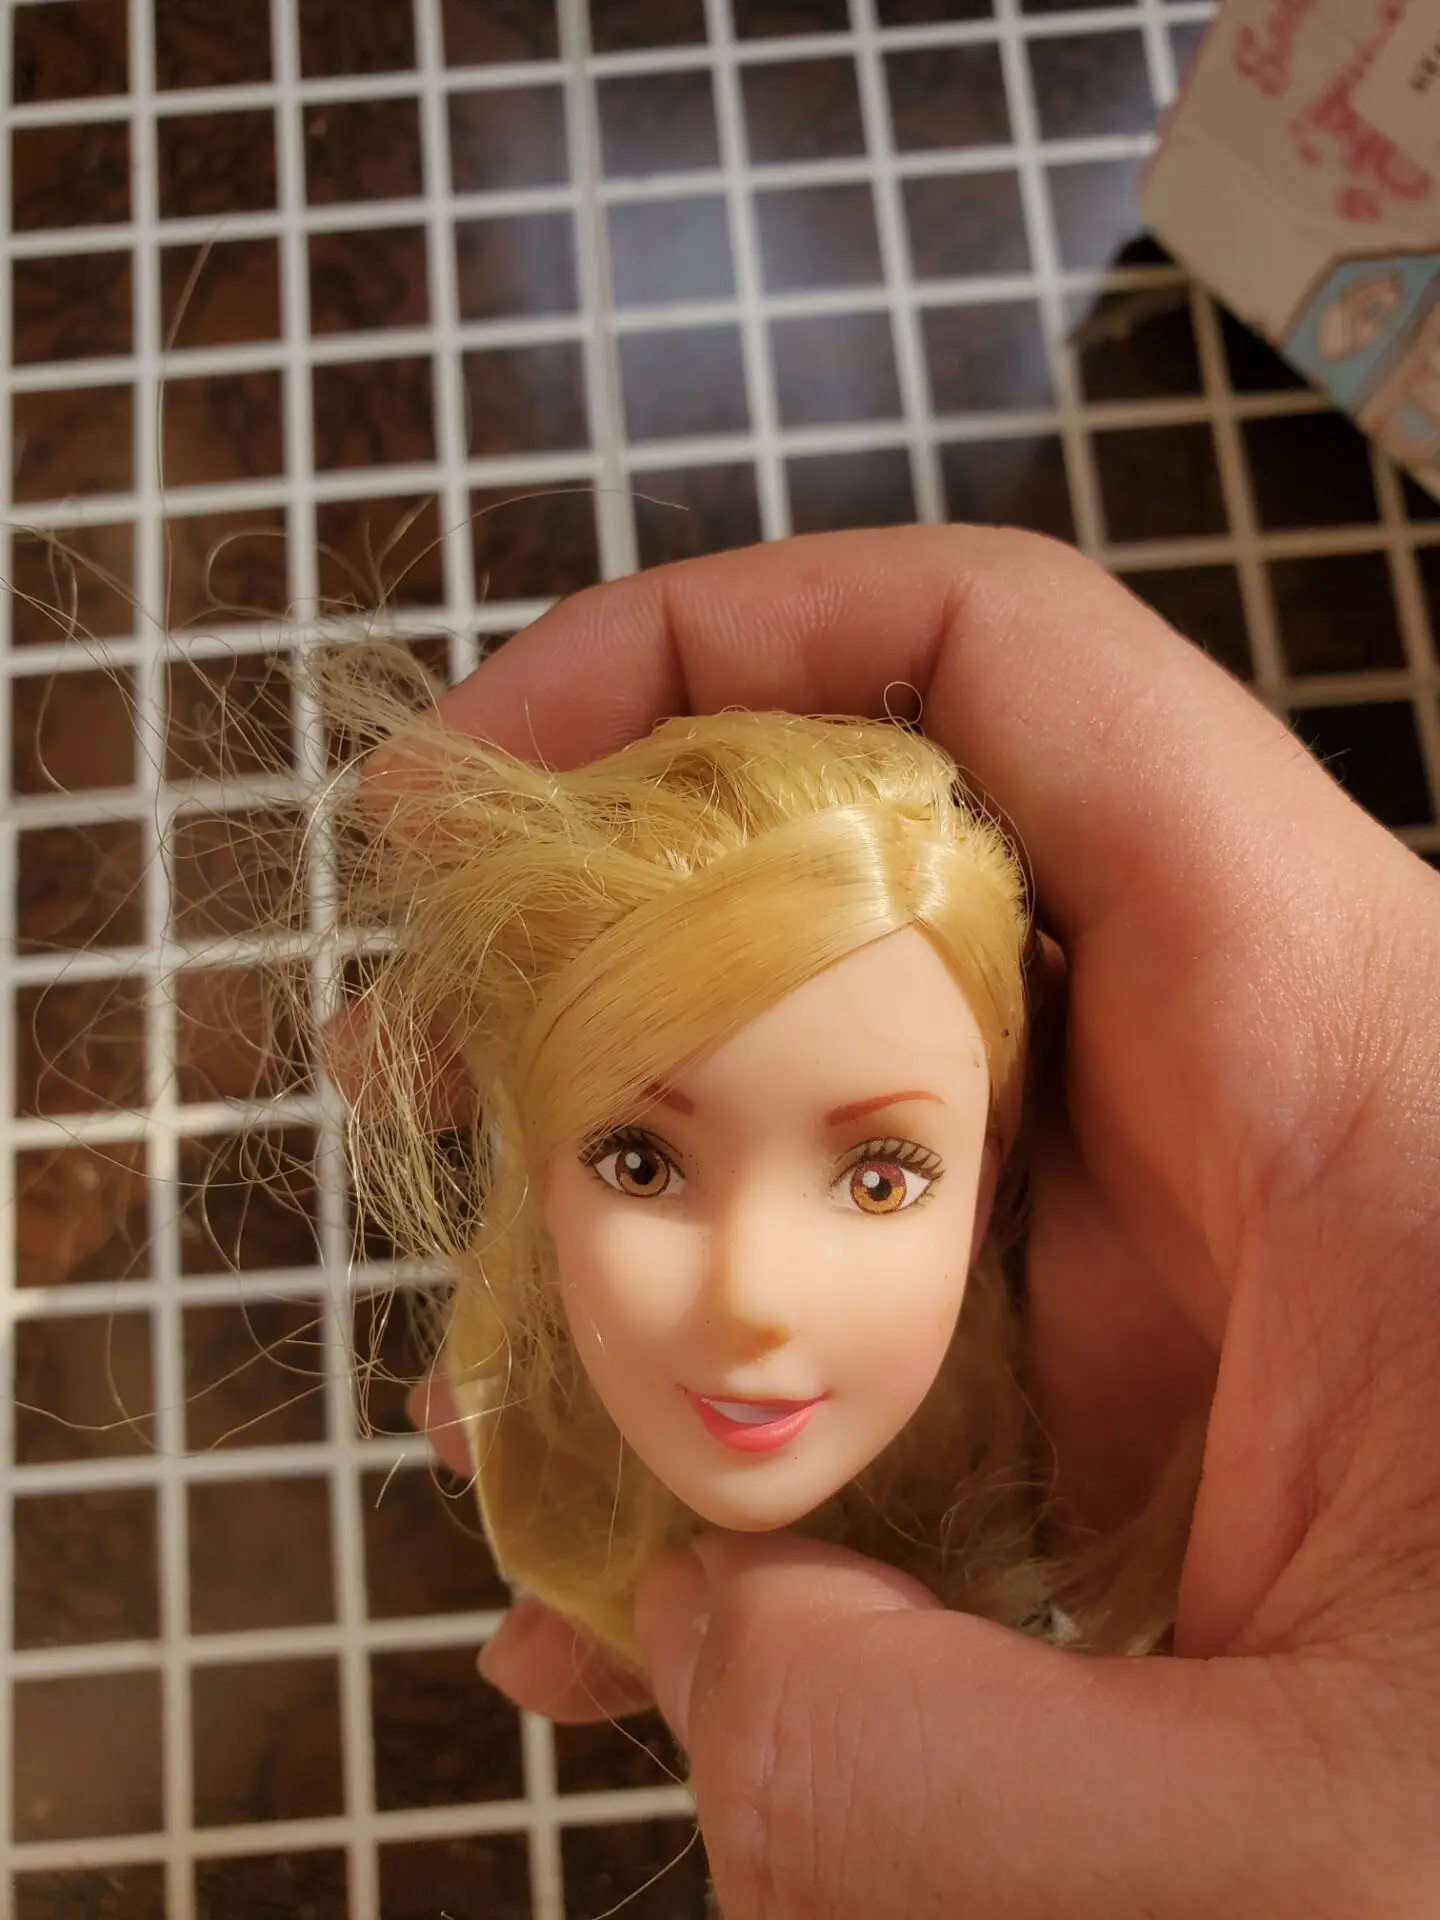 Original DSN Doll Head Accessories mulan Snow White Cinderella mermaid princess Toys images - 6